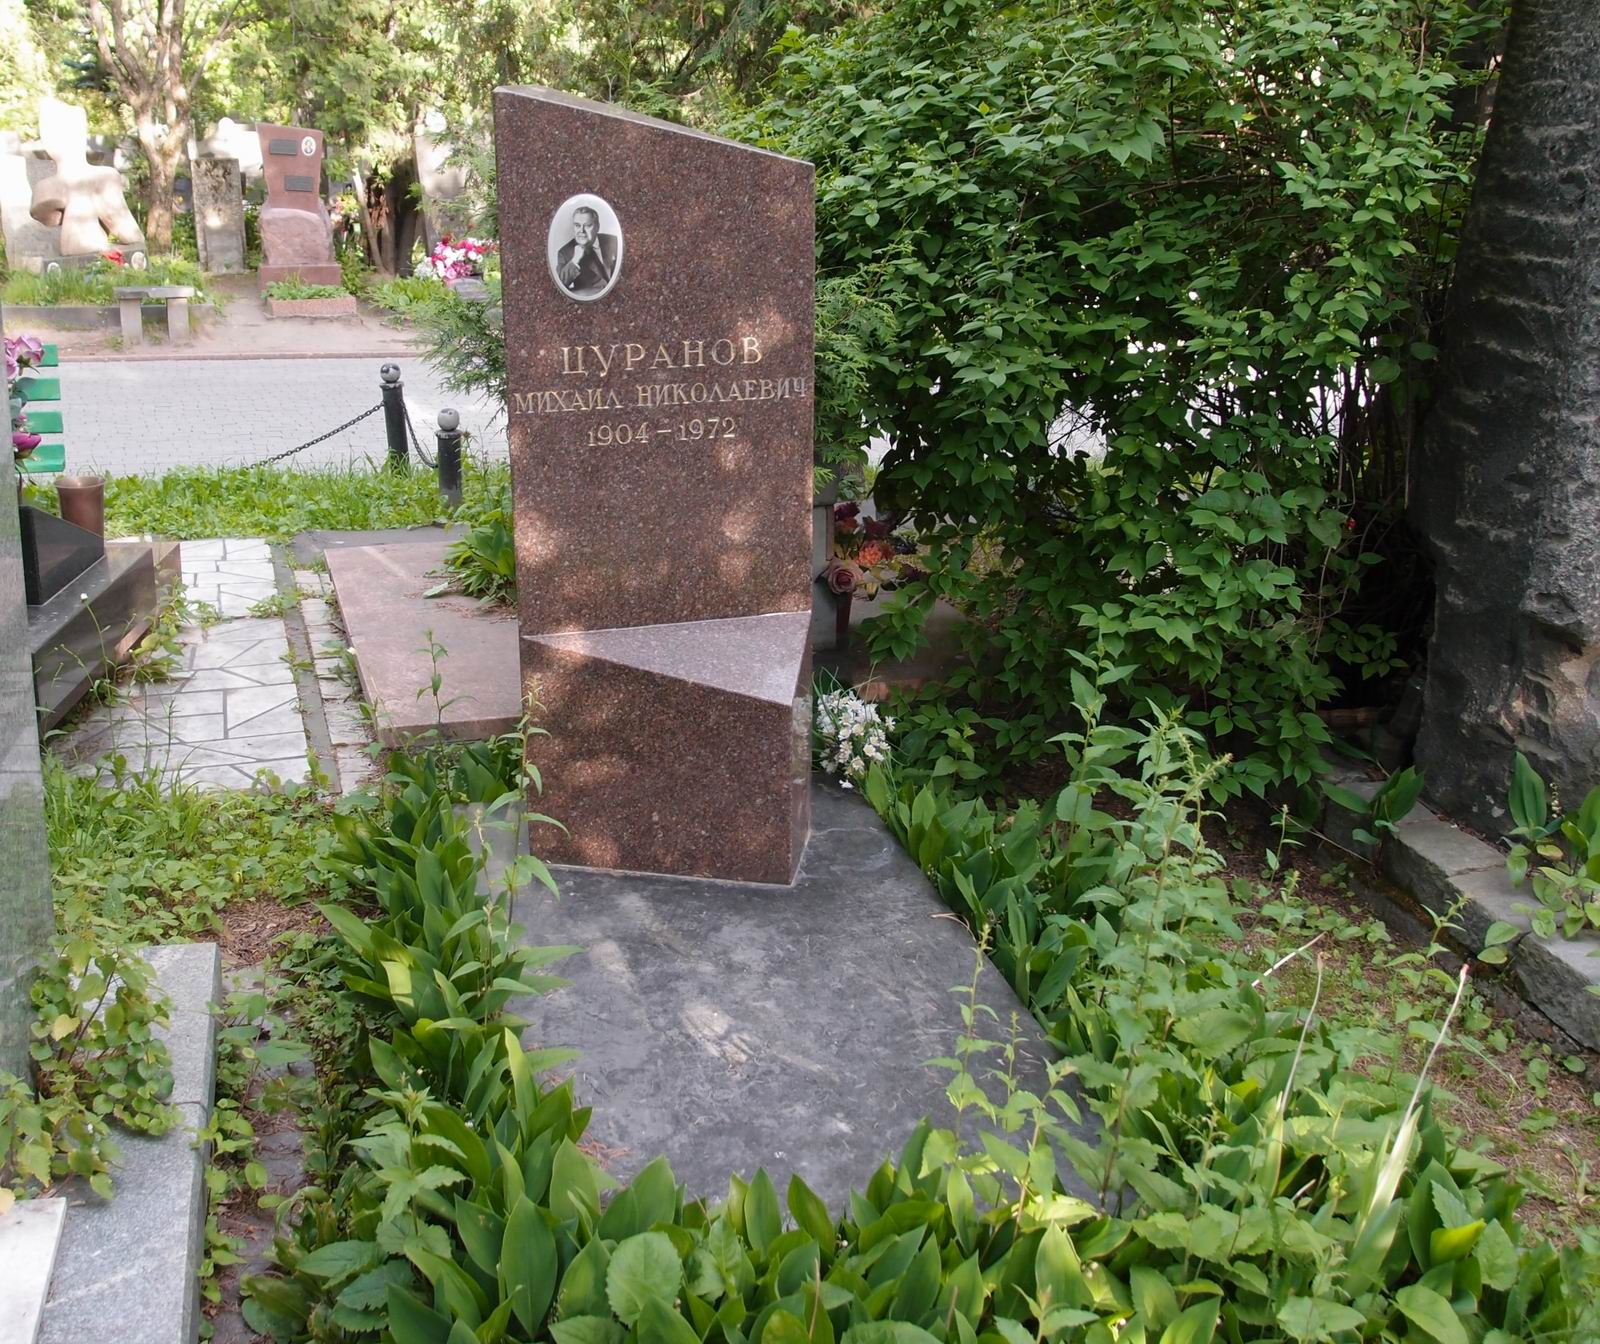 Памятник на могиле Цуранова М.Н. (1904-1972), по проекту Л.Цуранова, на Новодевичьем кладбище (7-2-20).